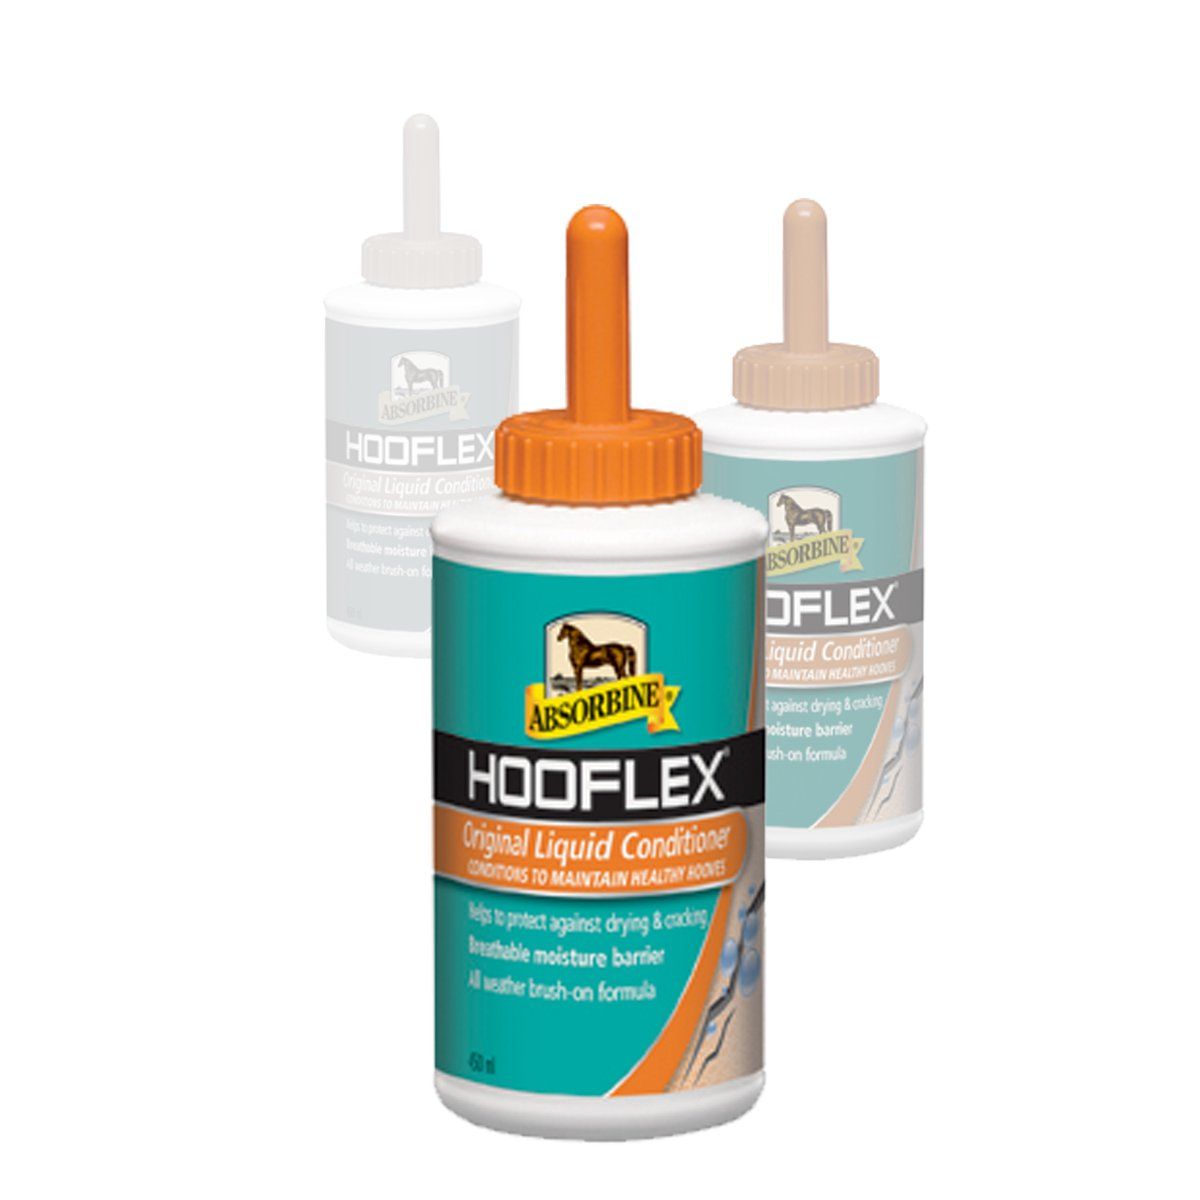 ABSORBINE Hooflex Liquid Conditioner